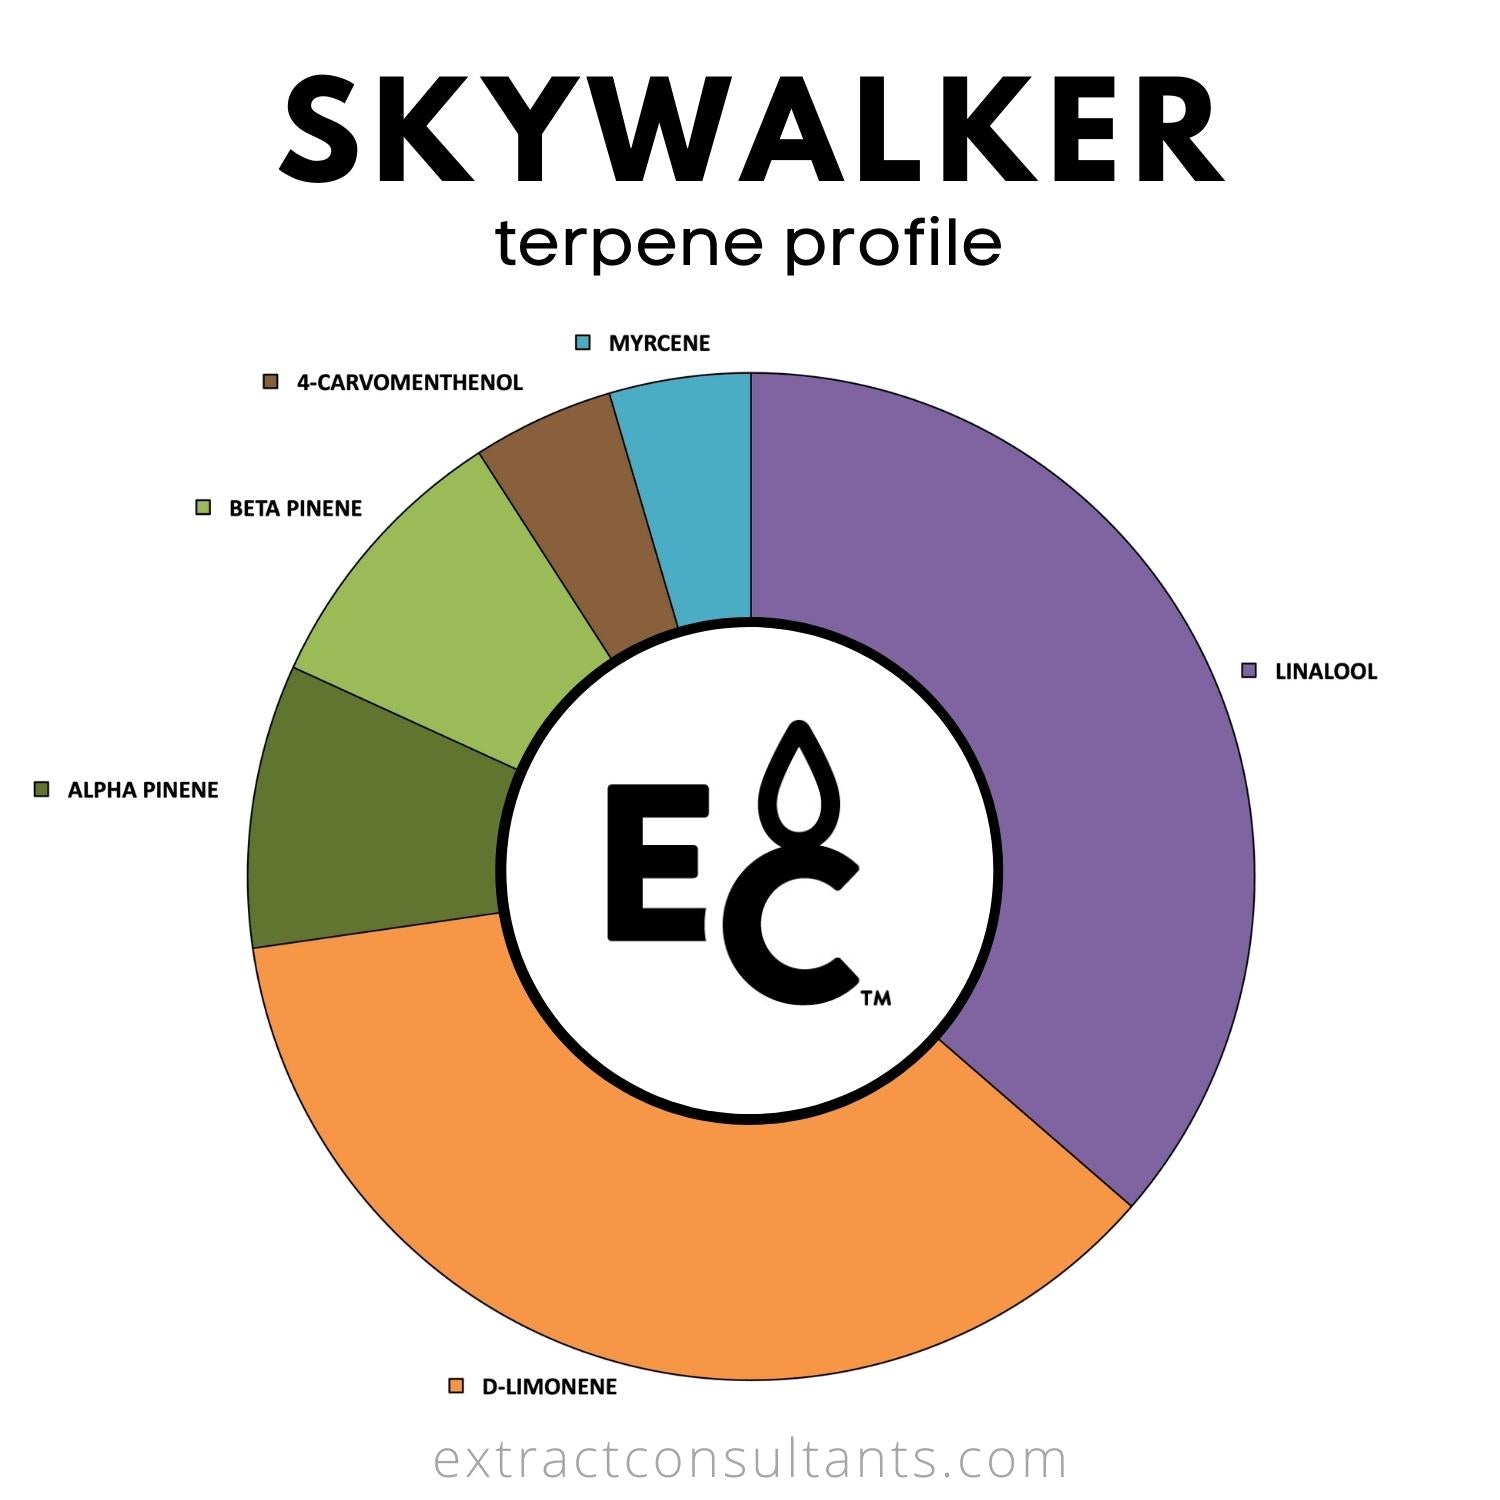 Skywalker terpene profile chart